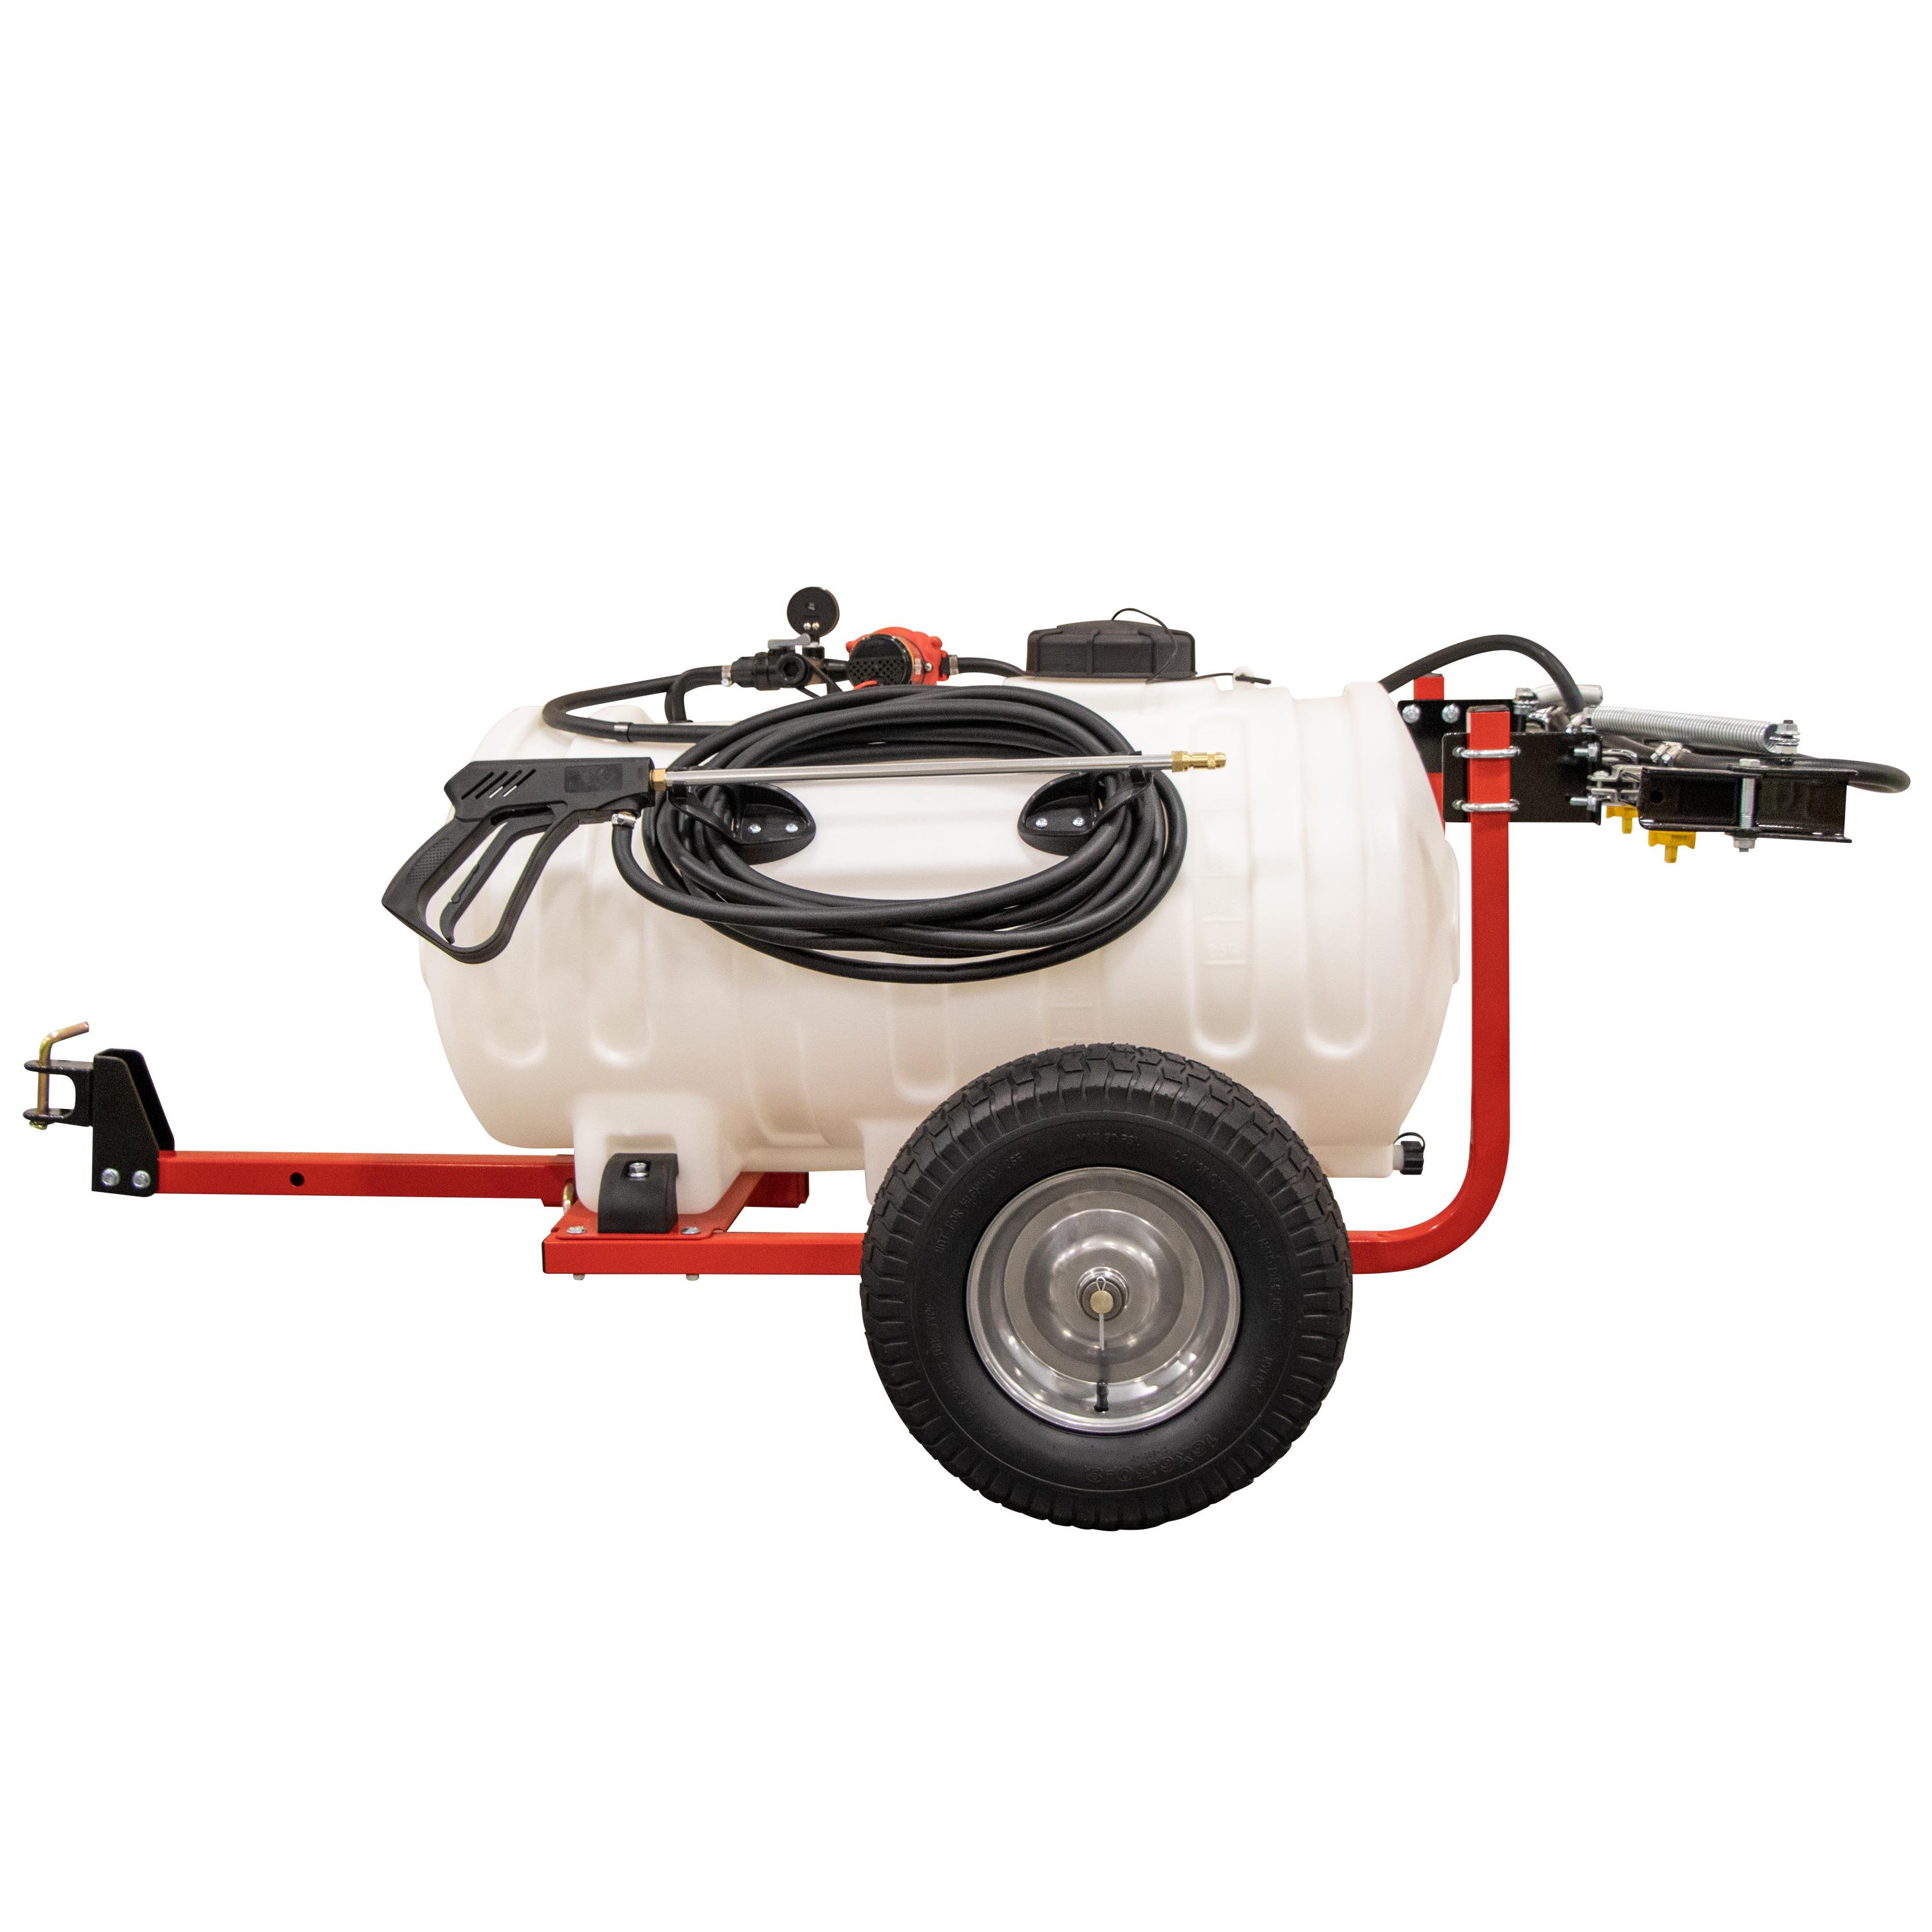 FIMCO 45 Gallon Lawn and Garden Trailer Sprayer with 2.4 GPM pump